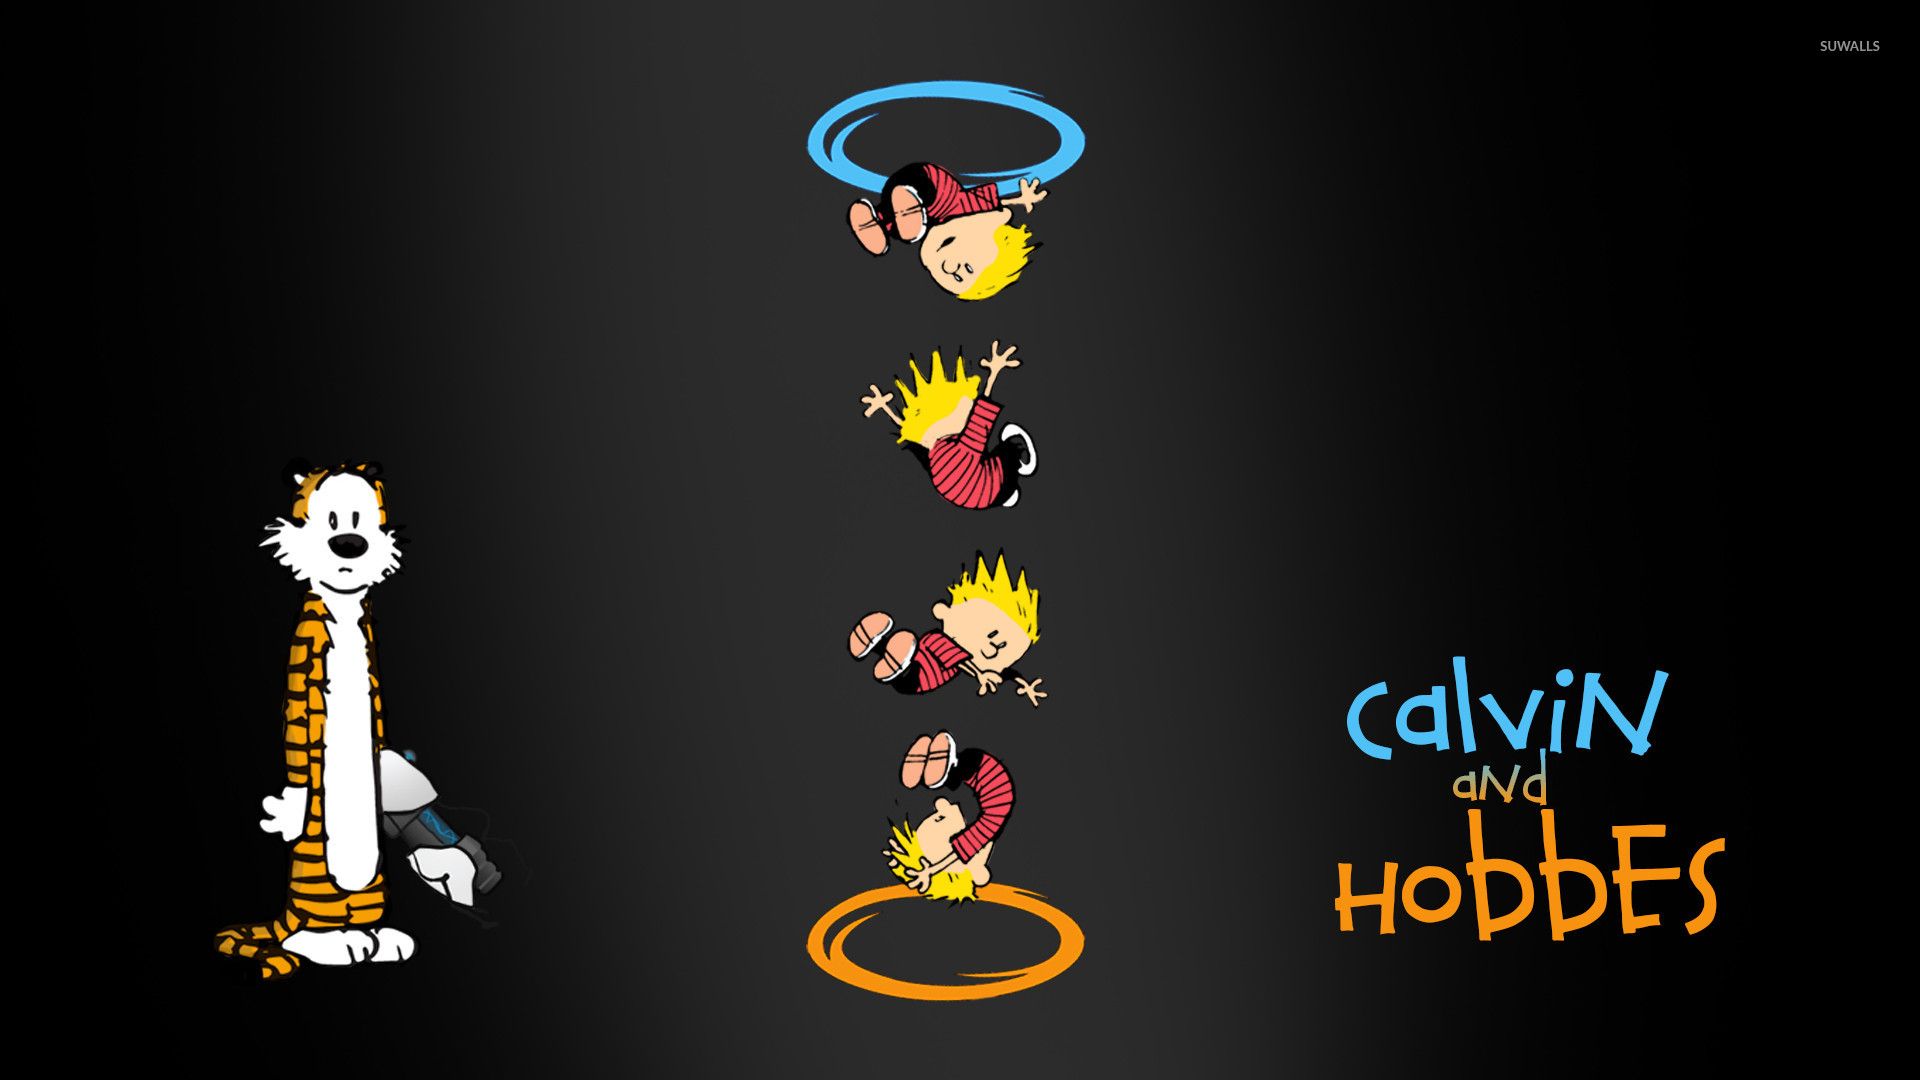 Calvin and Hobbes Portal crossover wallpaper wallpaper